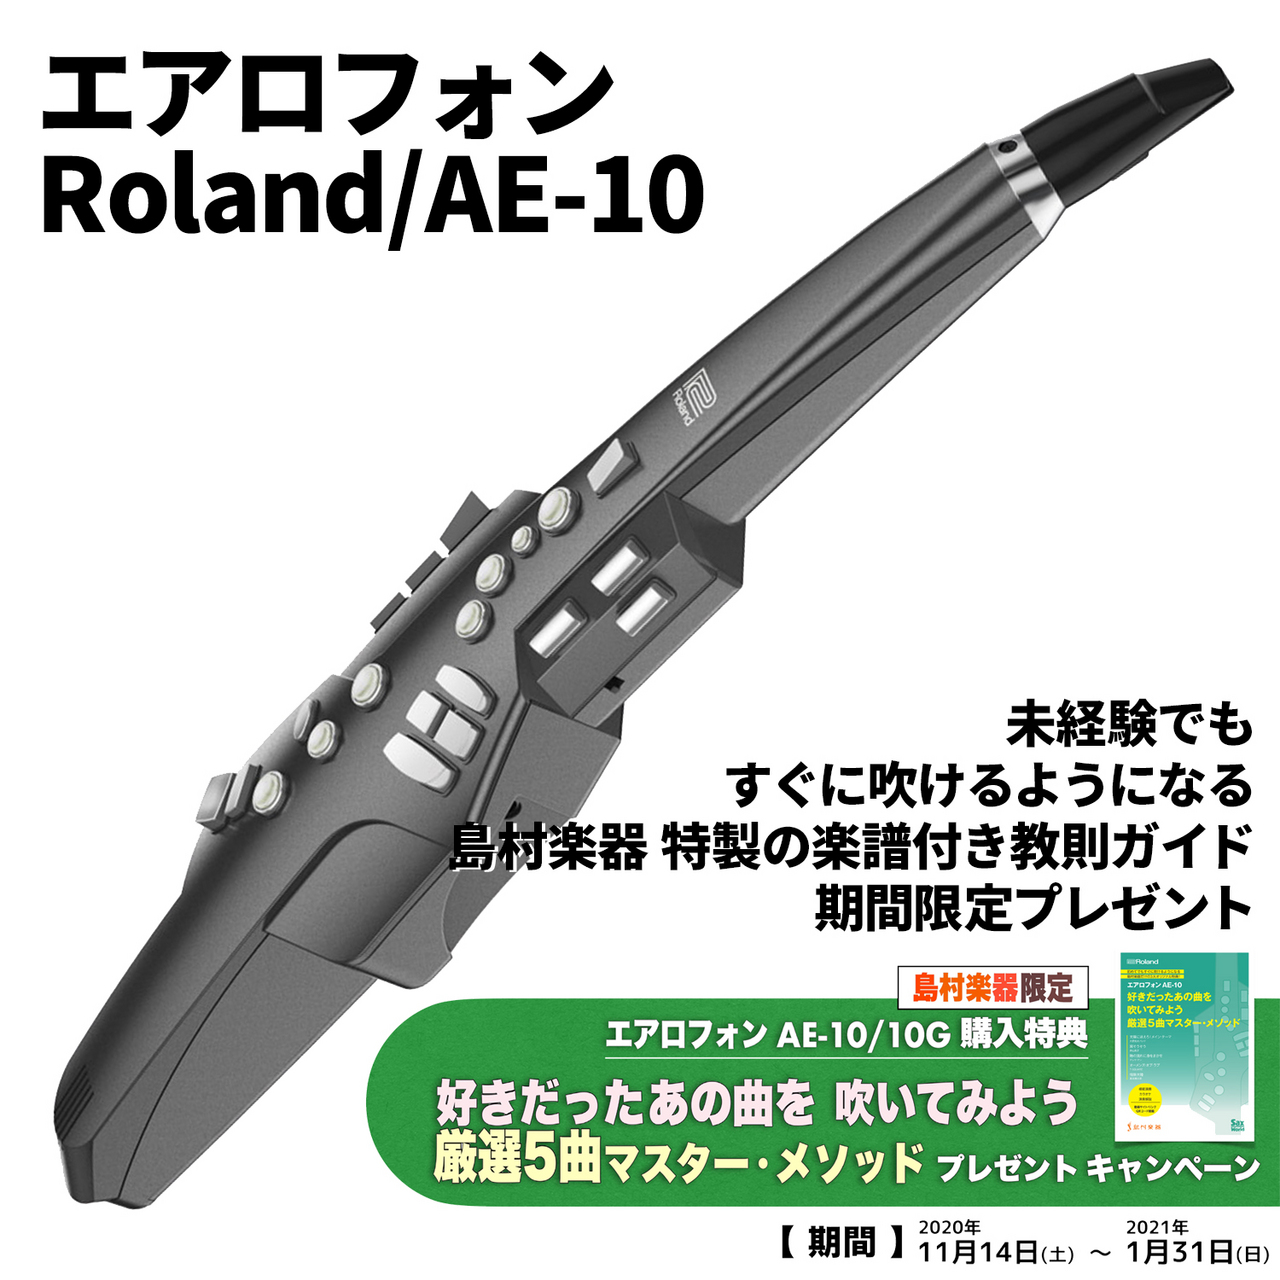 Roland AE-10G